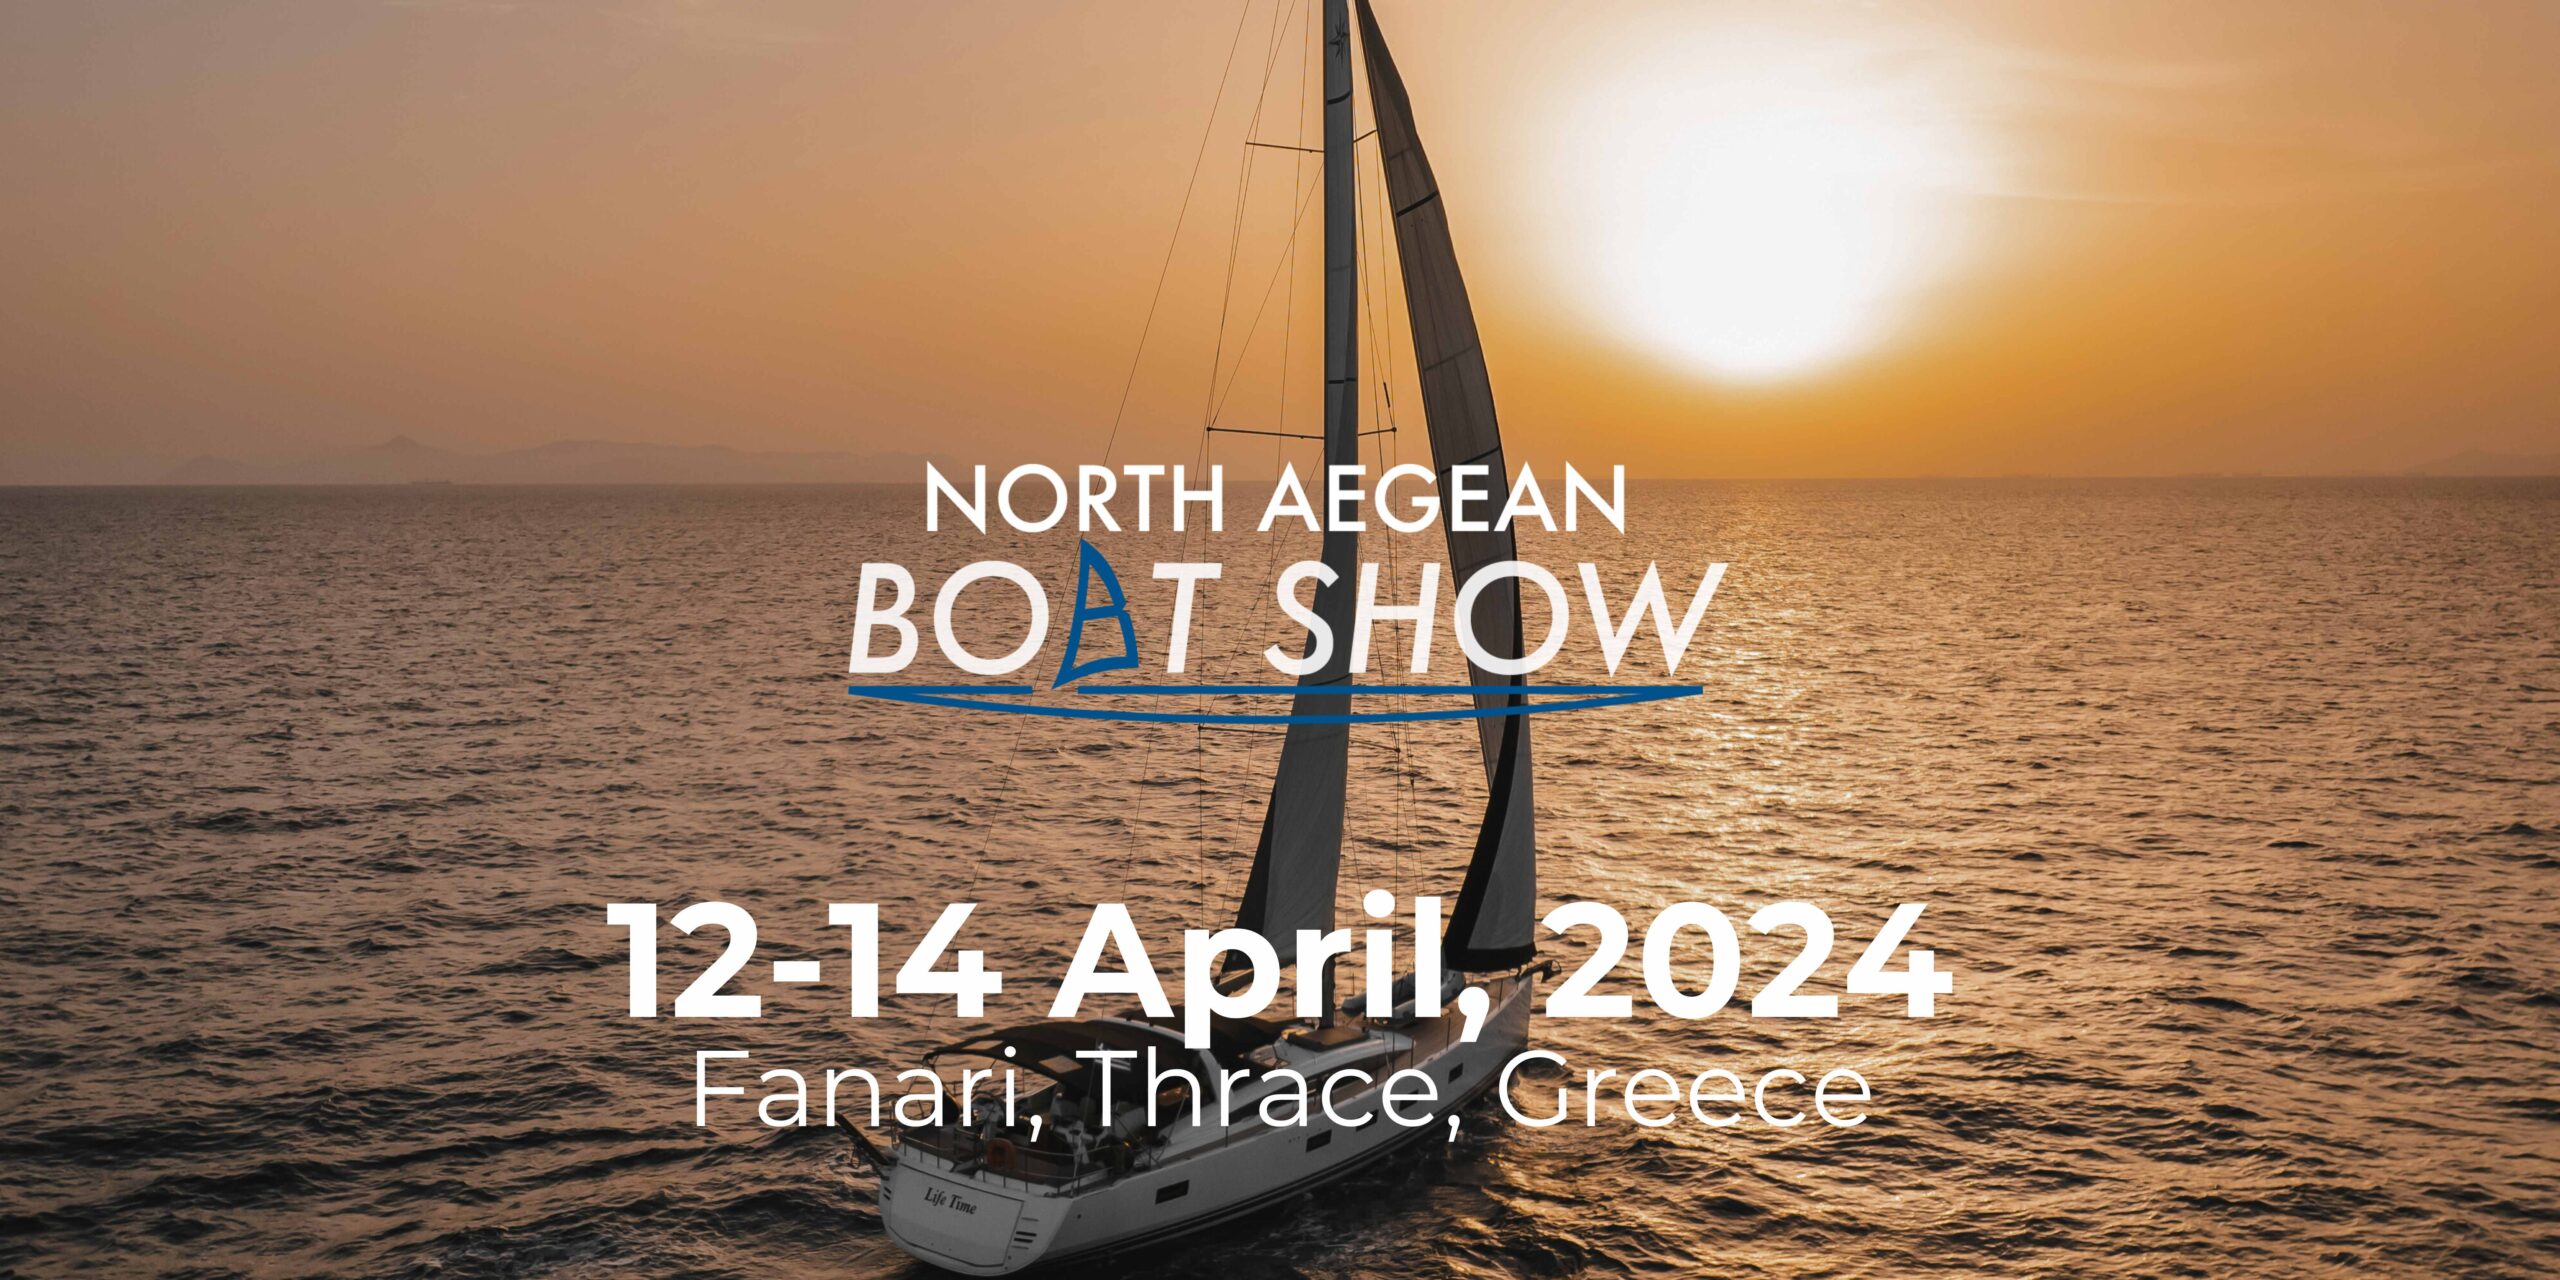 North Aegean Boat Show: Η πρώτη έκθεση σκαφών στη Βόρεια Ελλάδα